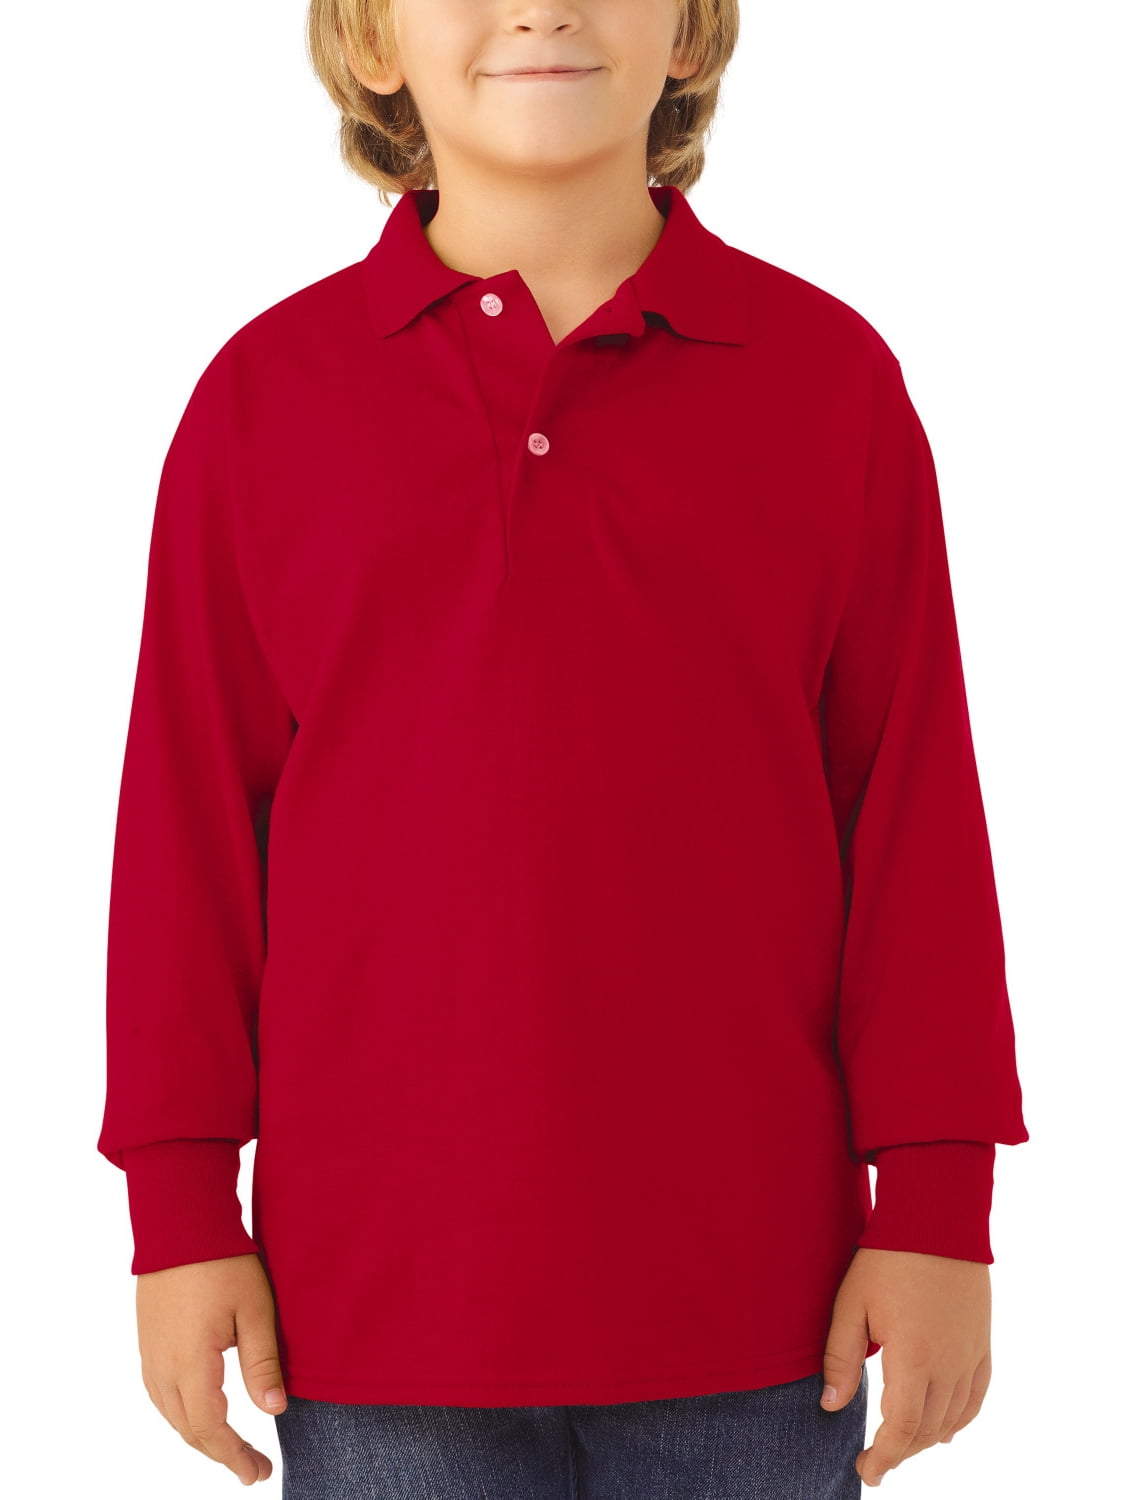 Pack Kids Childrens School Uniform Long Sleeve Polo Shirt Fruit of the Loom 5